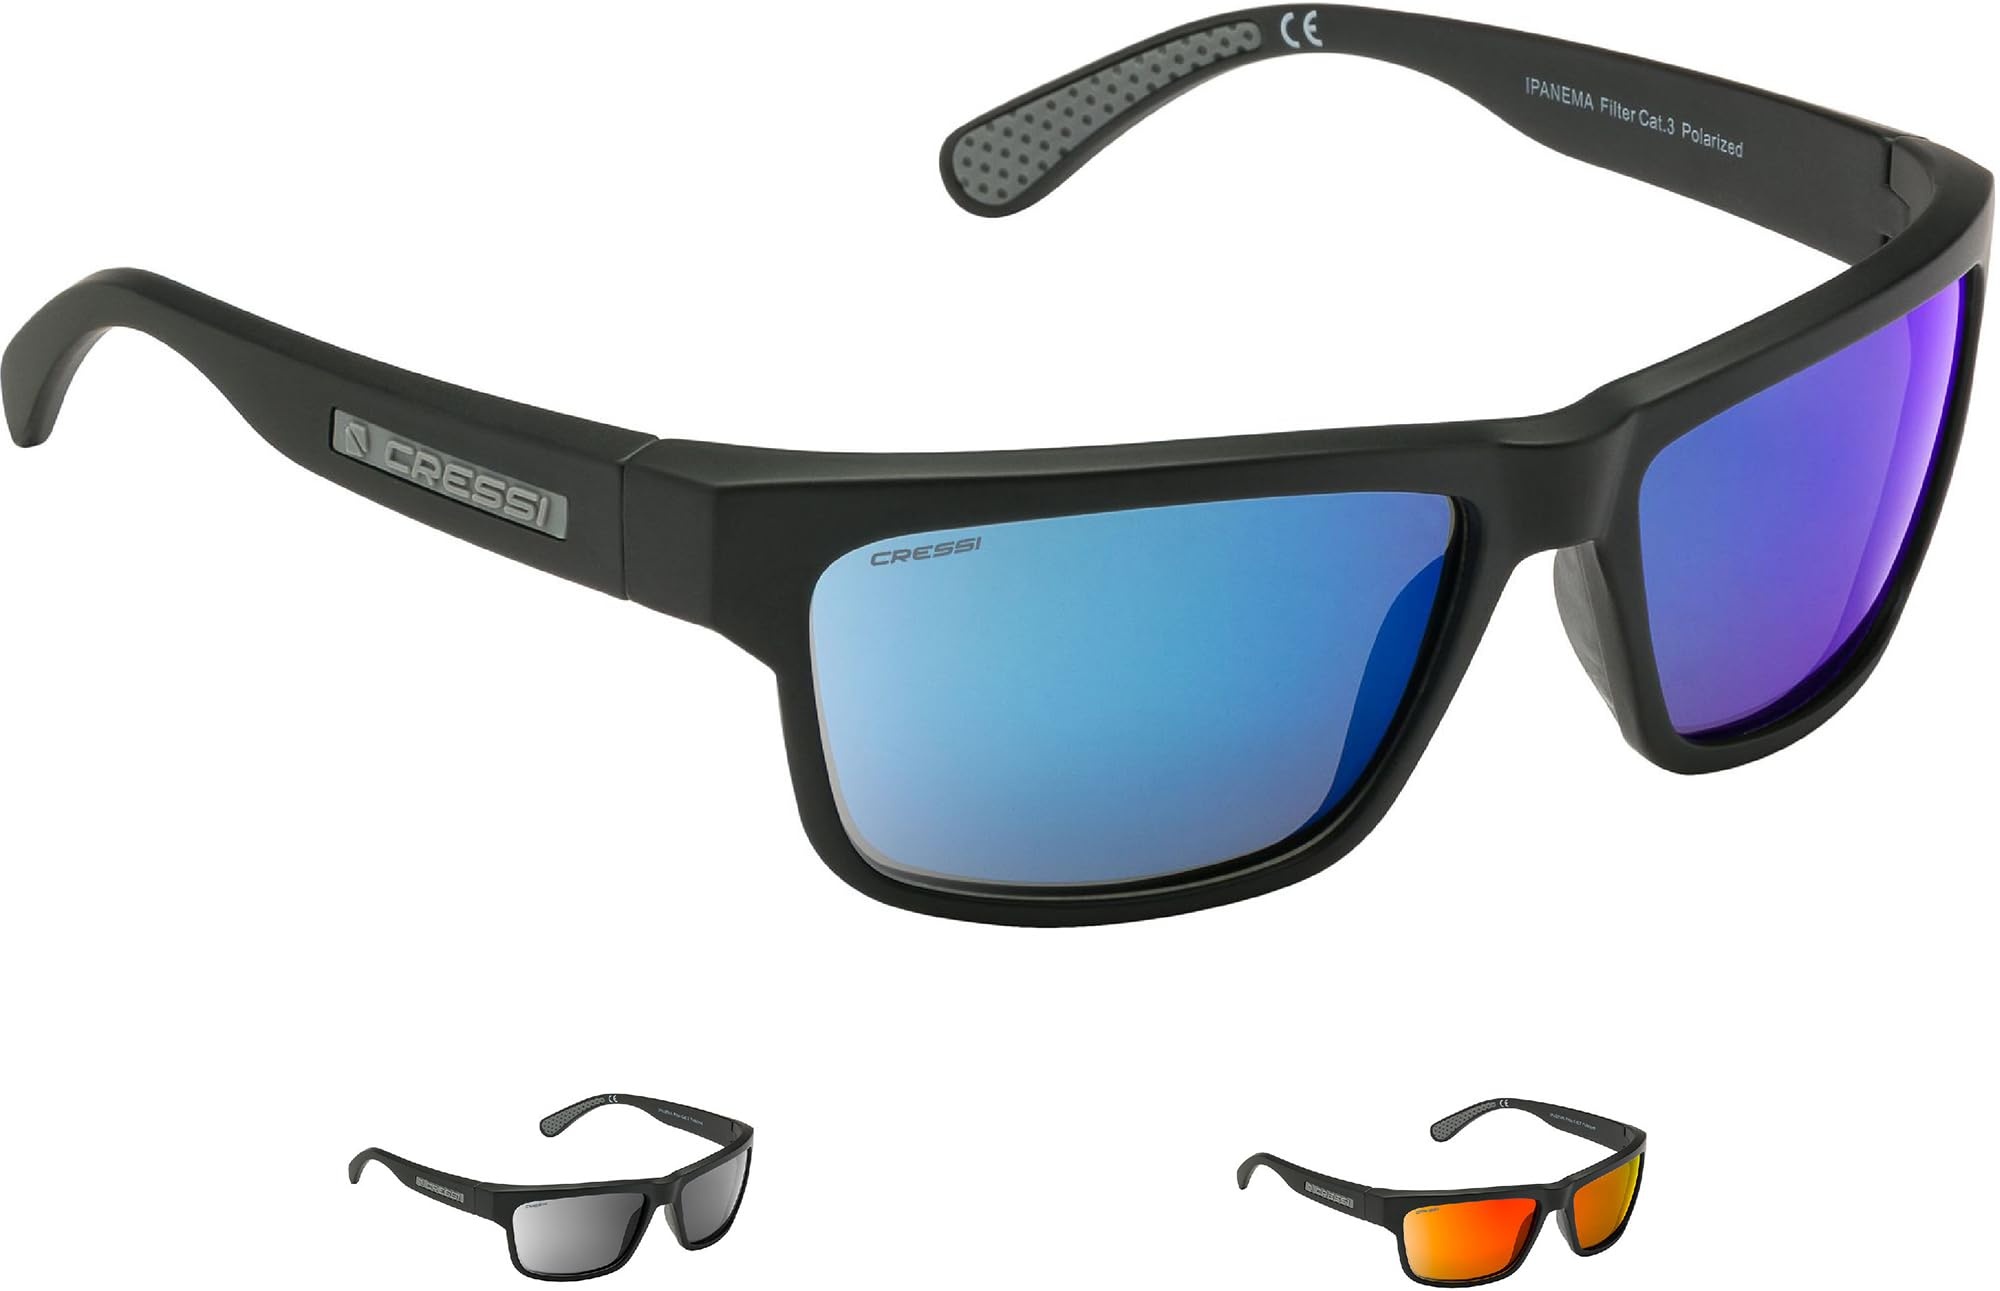 Cressi Ipanema Sunglasses - Unisex Adult Polarized Sports Sonnenbrille mit 100% UV-Schutz